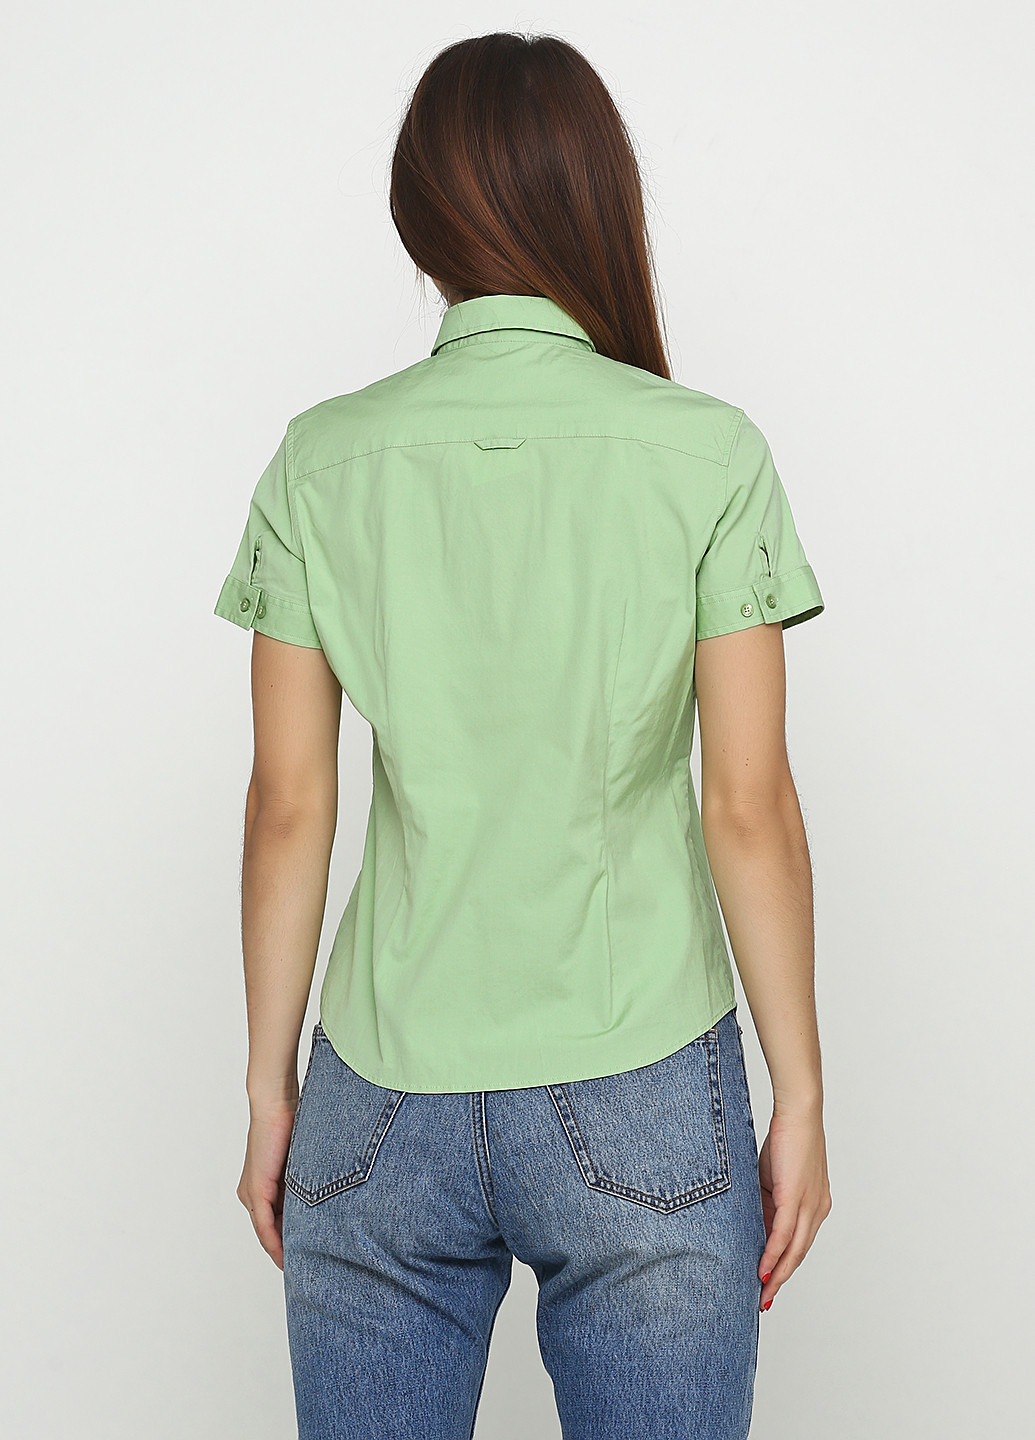 Светло-зеленая кэжуал рубашка однотонная Gant